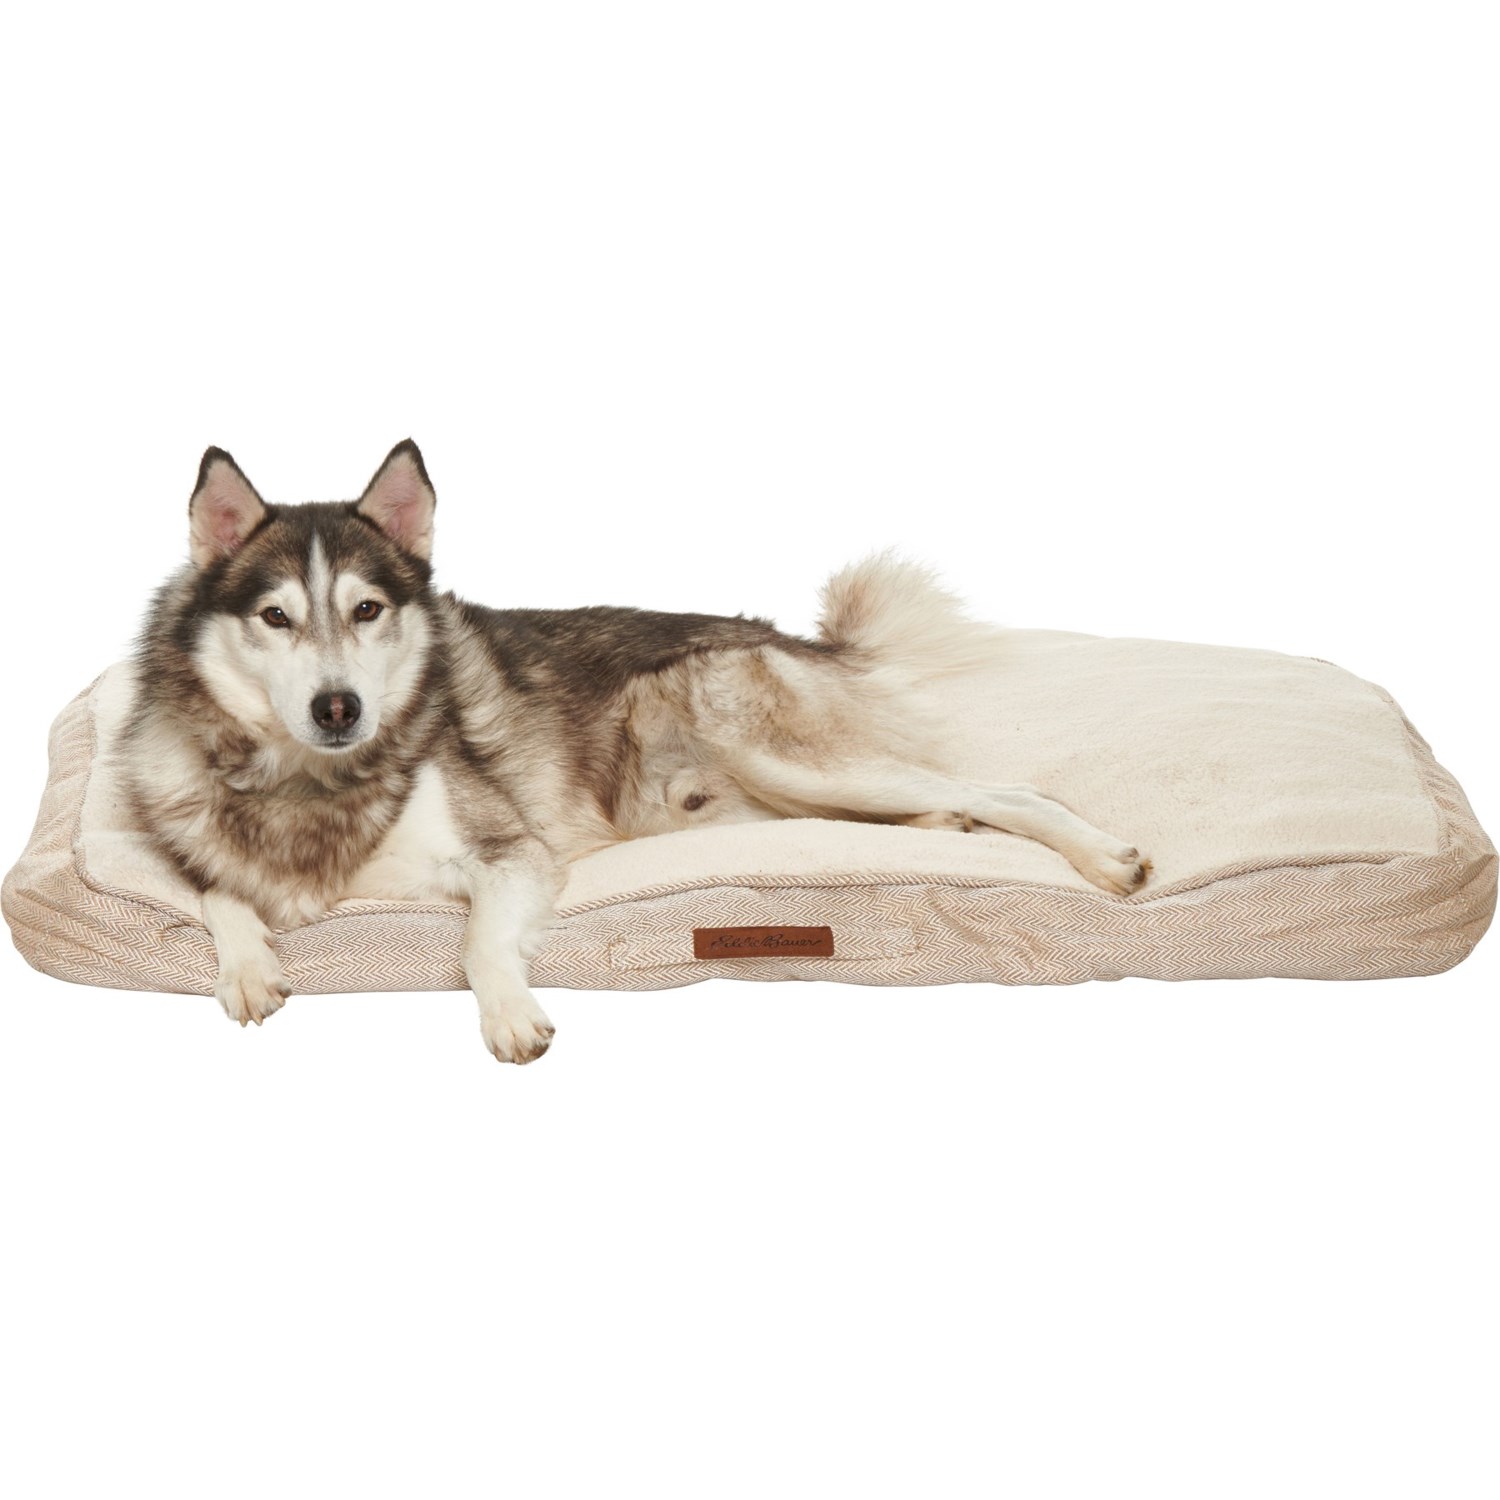 Eddie Bauer Buckner Herringbone Dog Bed - 42x30x6”